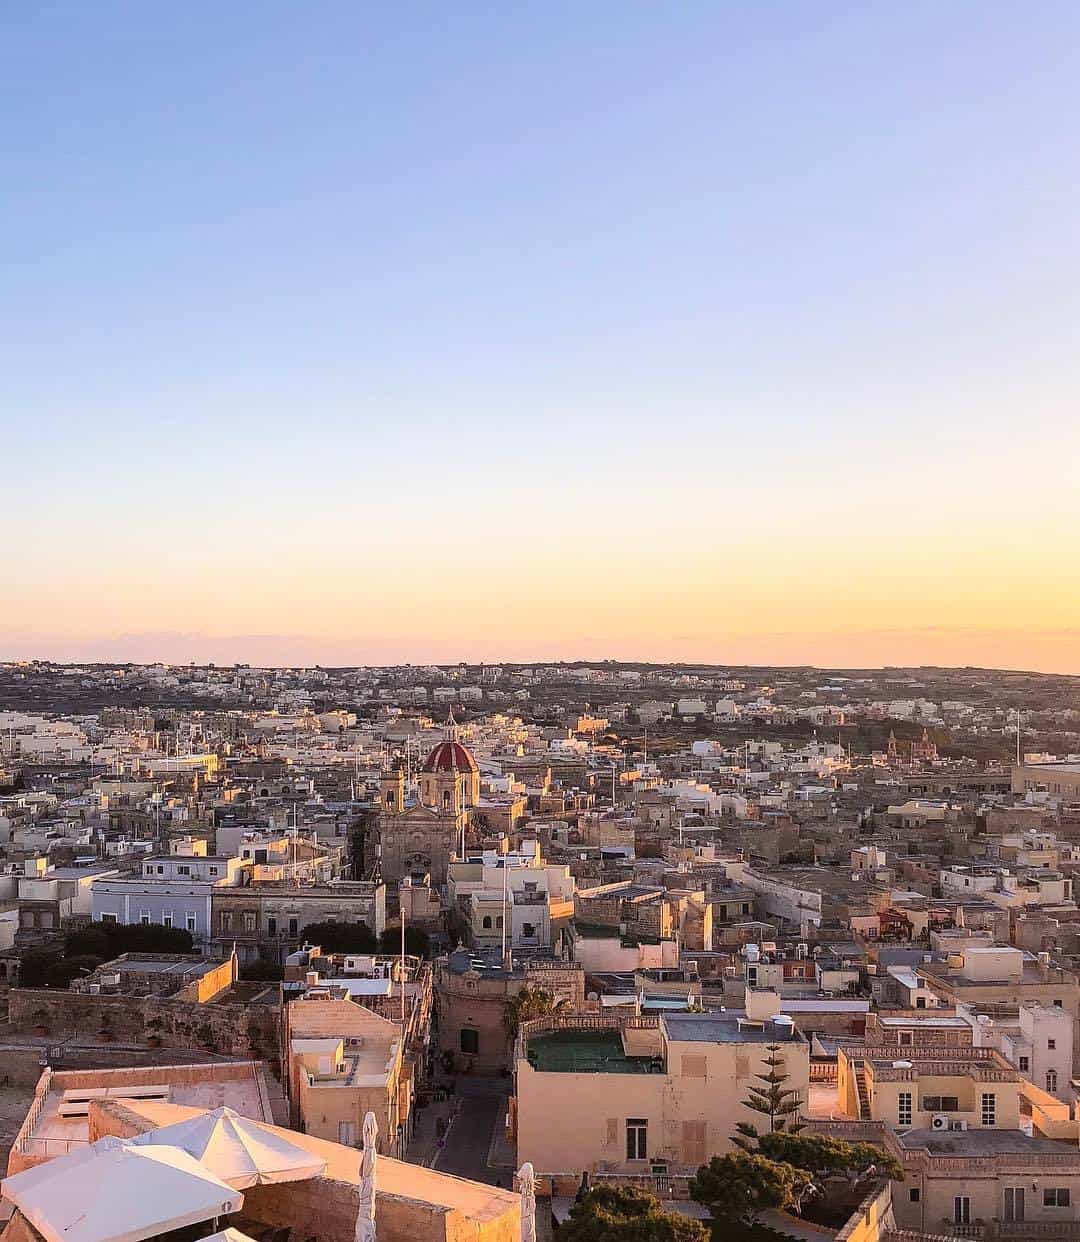 Sunset in Gozo, Malta